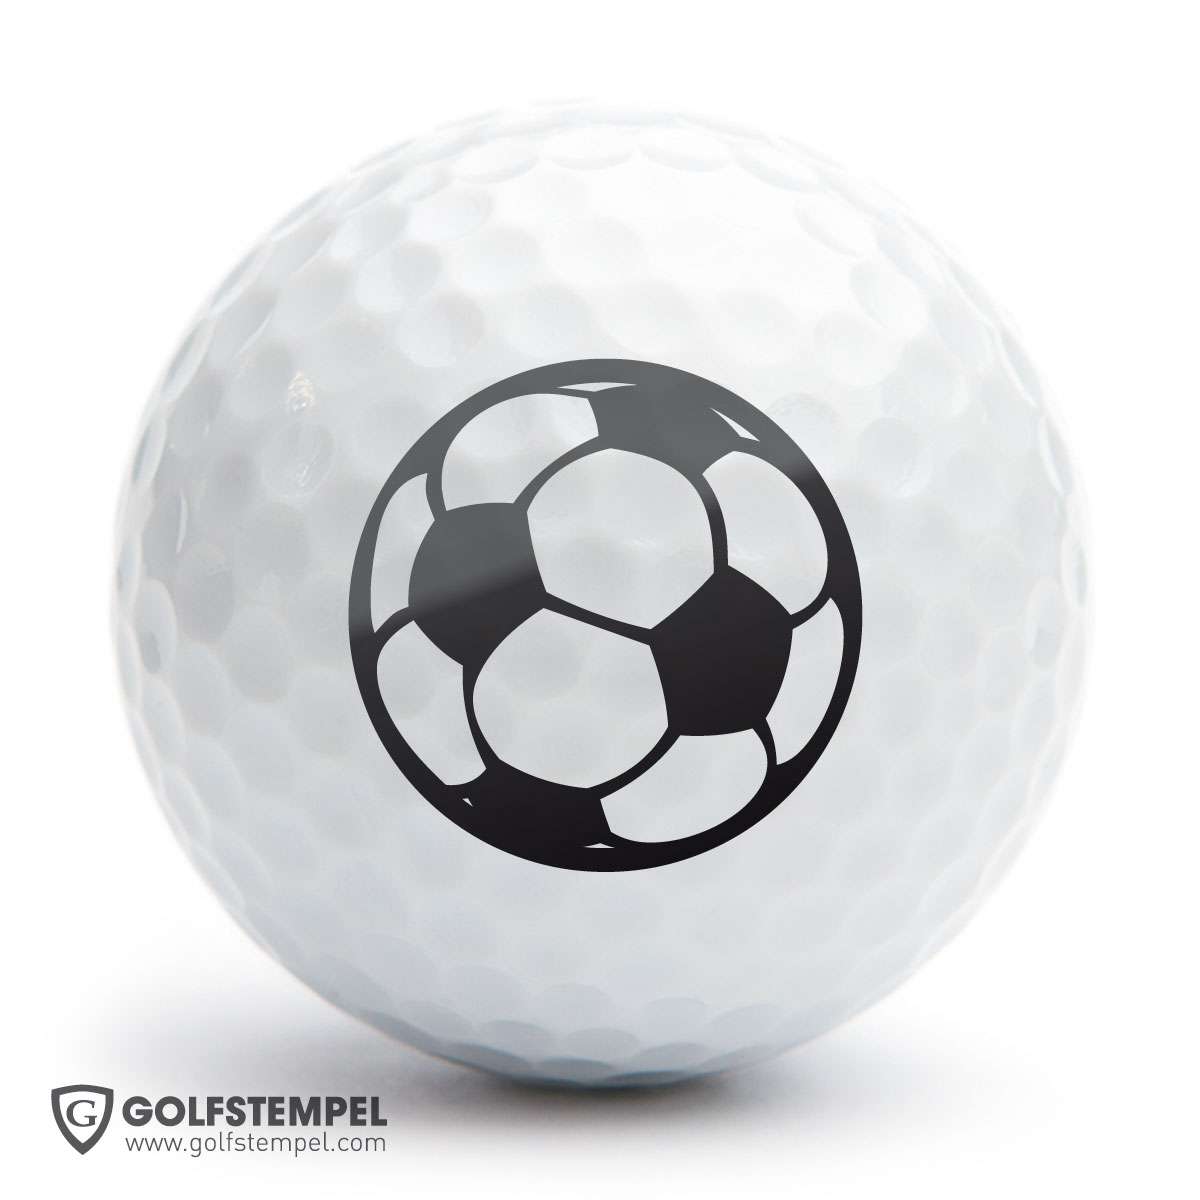 Personalisierbarer Golfball Stempel A-Z 0–9 mit Tinte Initial wasserdicht 10 mm